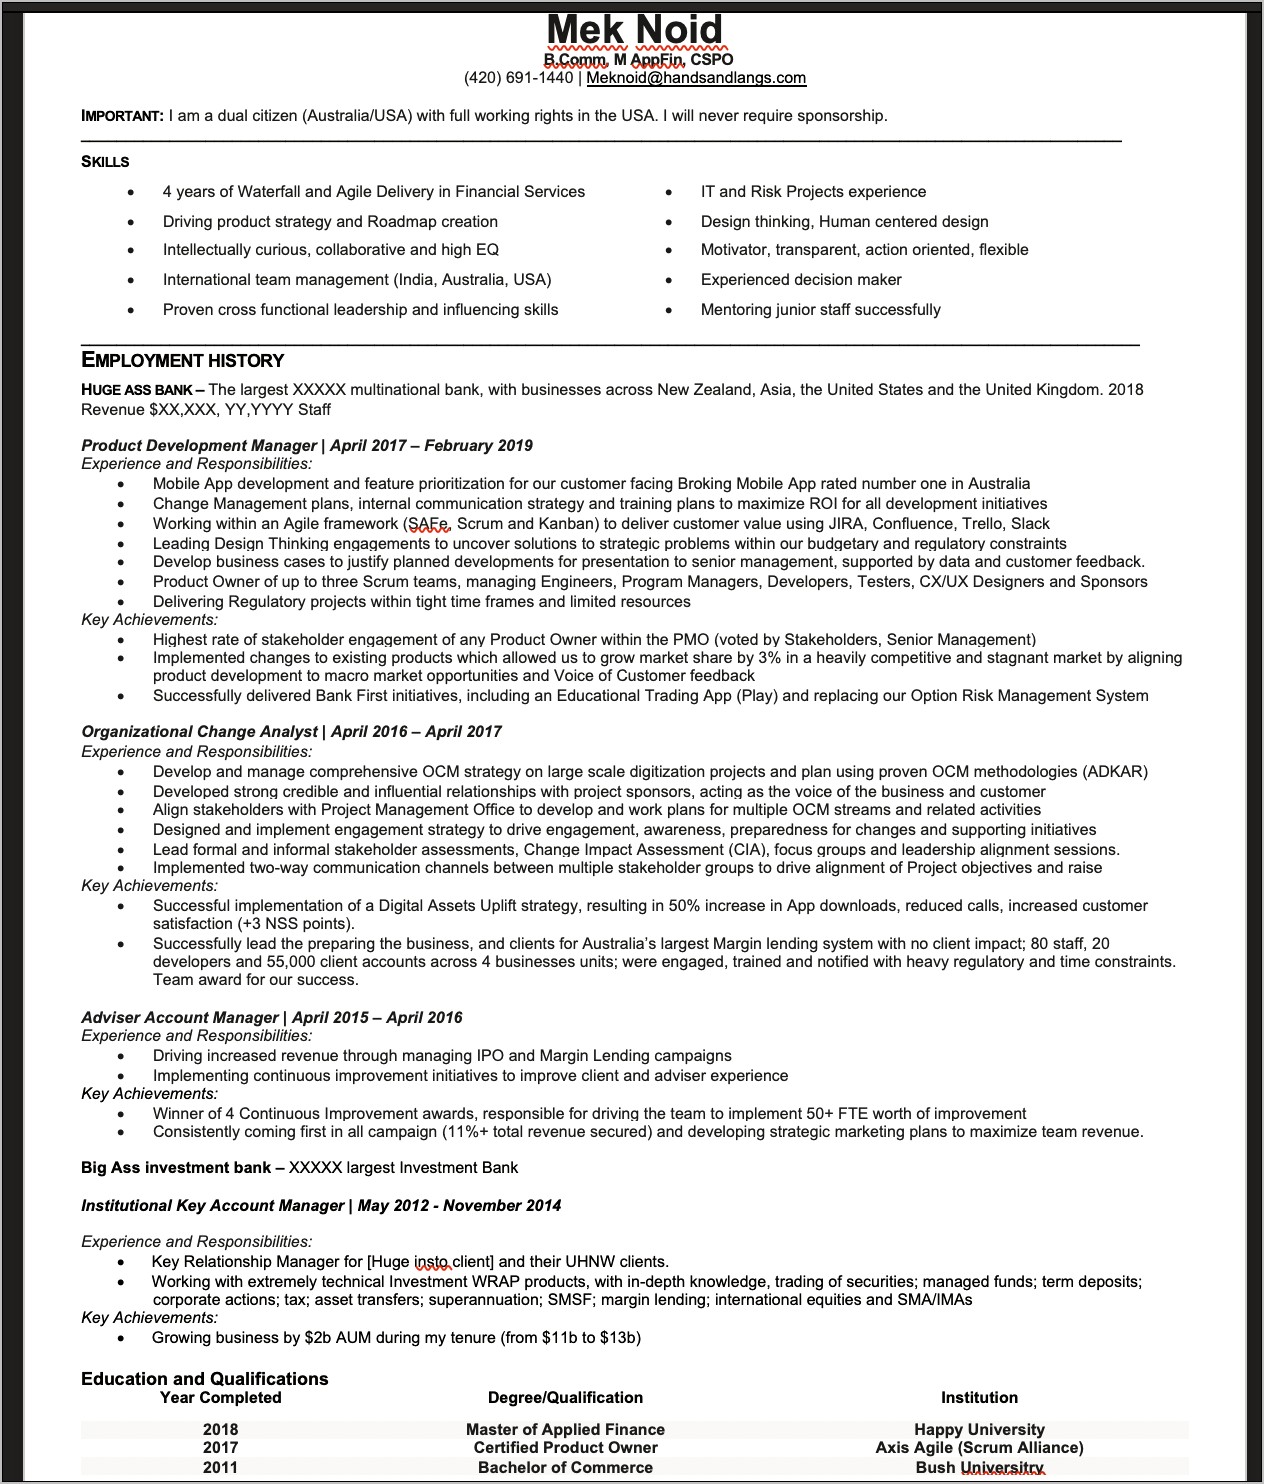 Resume Job Description Examples Reddit